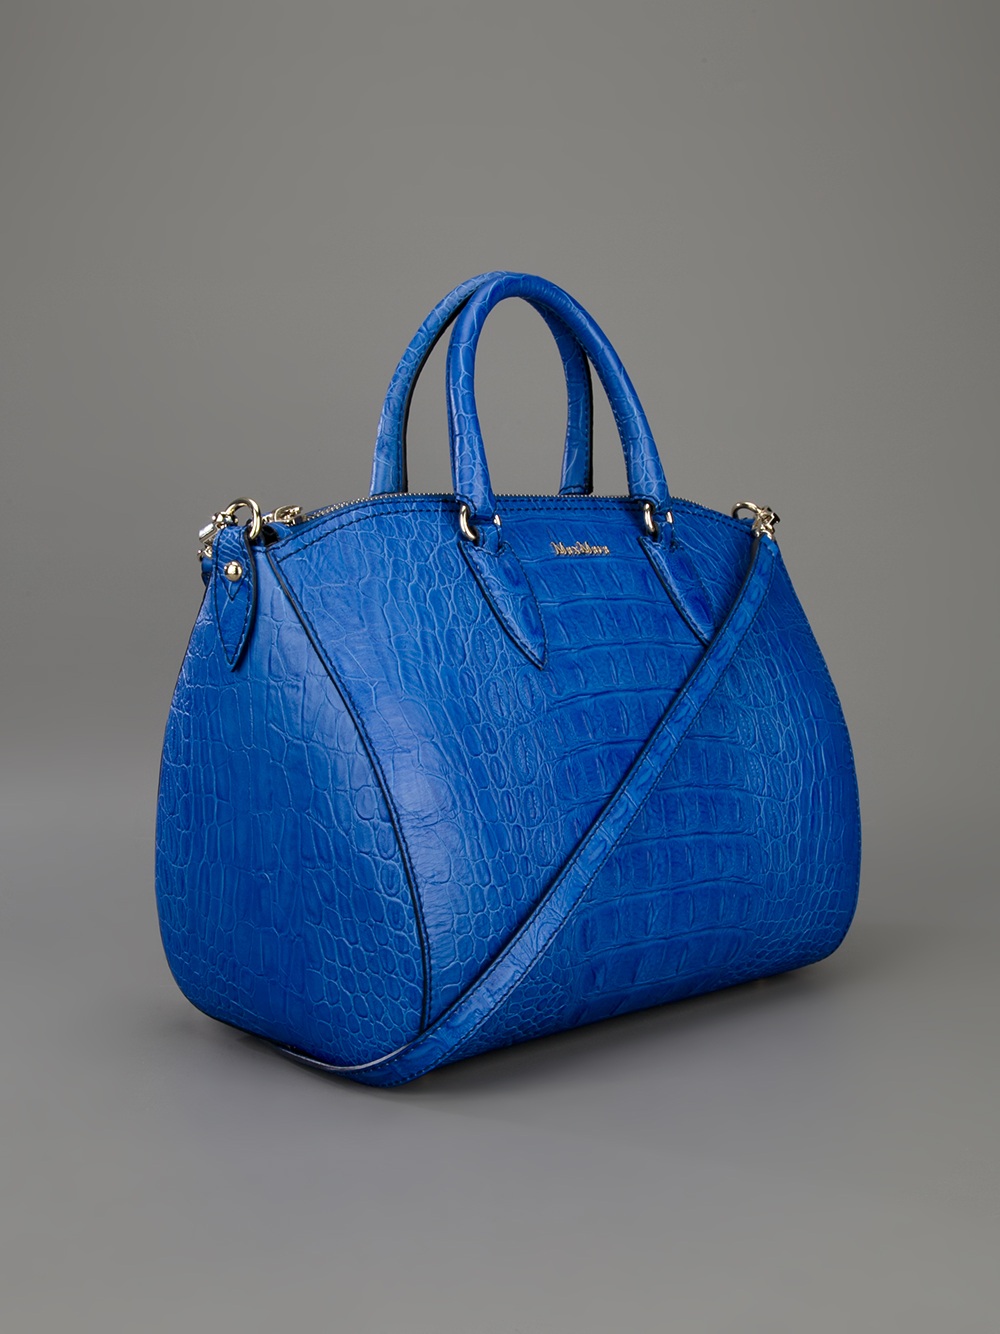 Max mara Tote Bag in Blue | Lyst